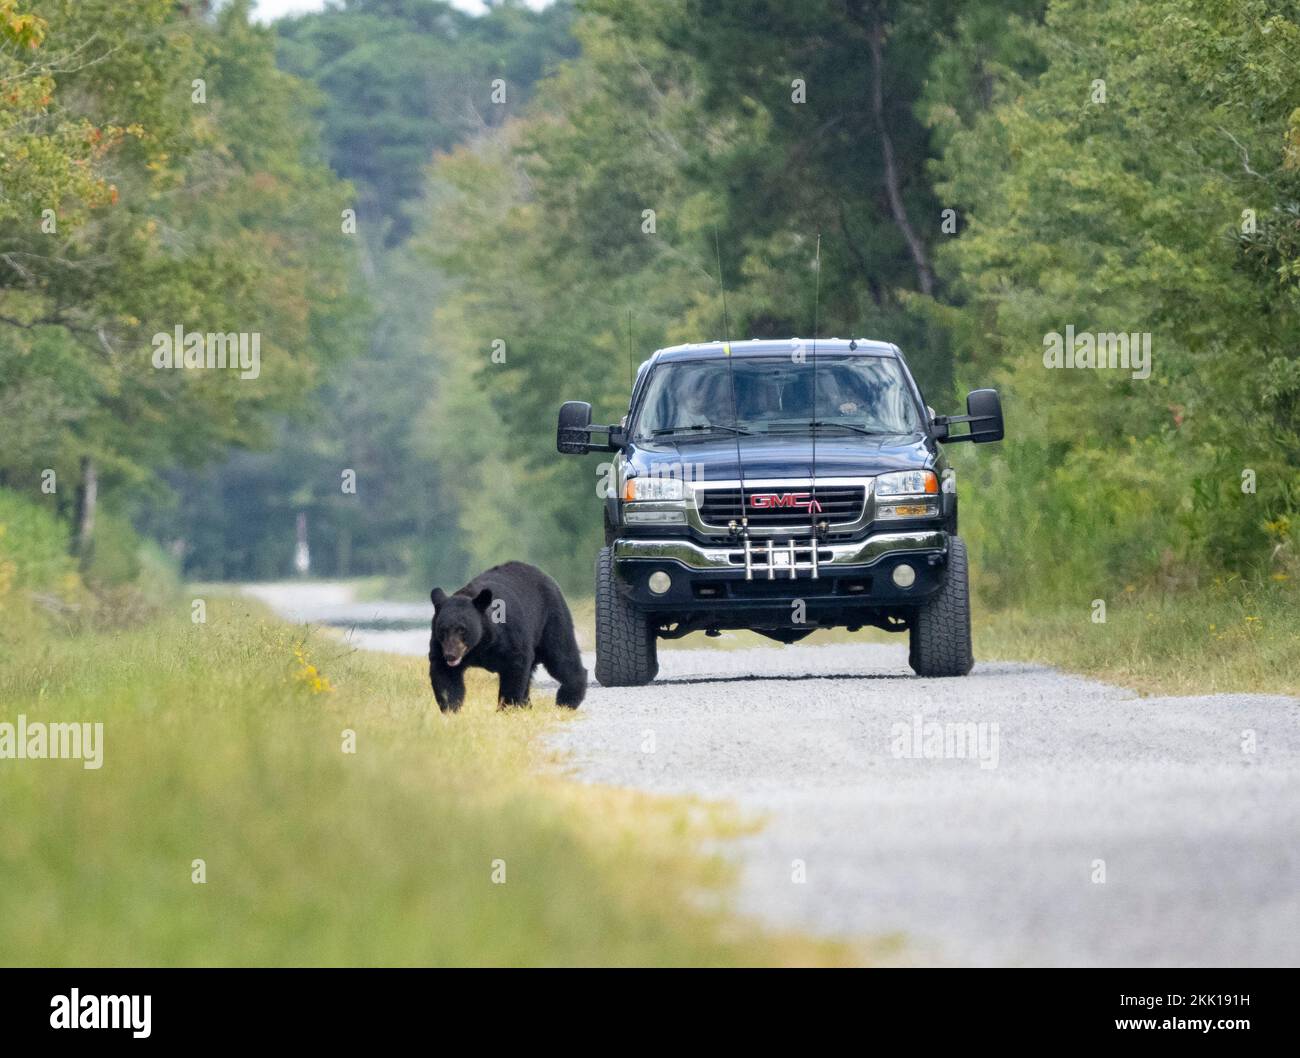 American Black Bear (Ursus americanus) walking down a dirt road followed by a vehicle Stock Photo